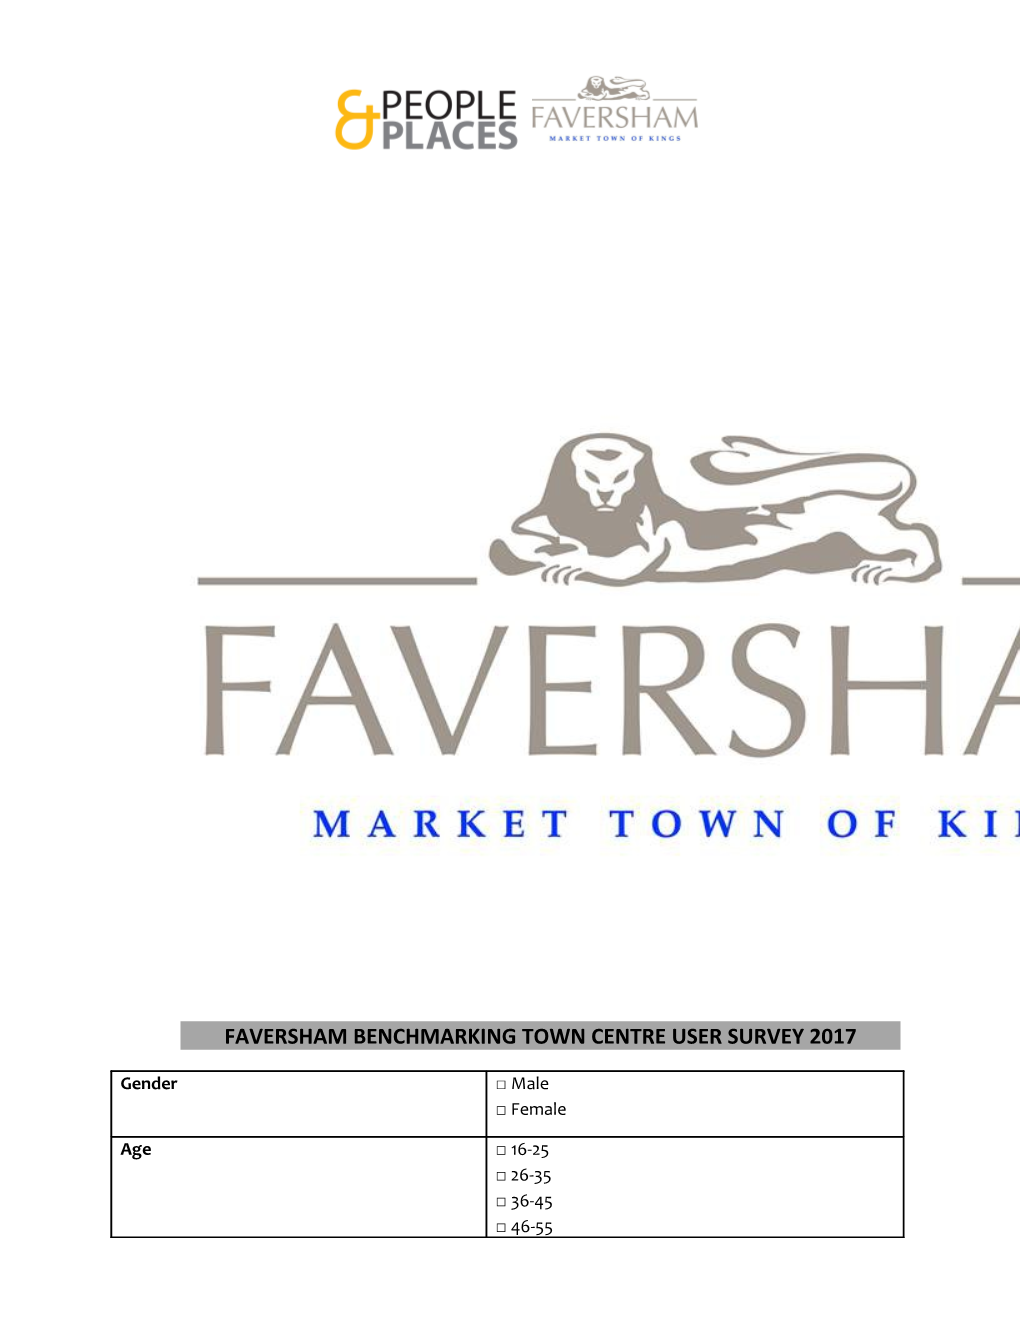 Faversham Benchmarking Town Centre User Survey 2017